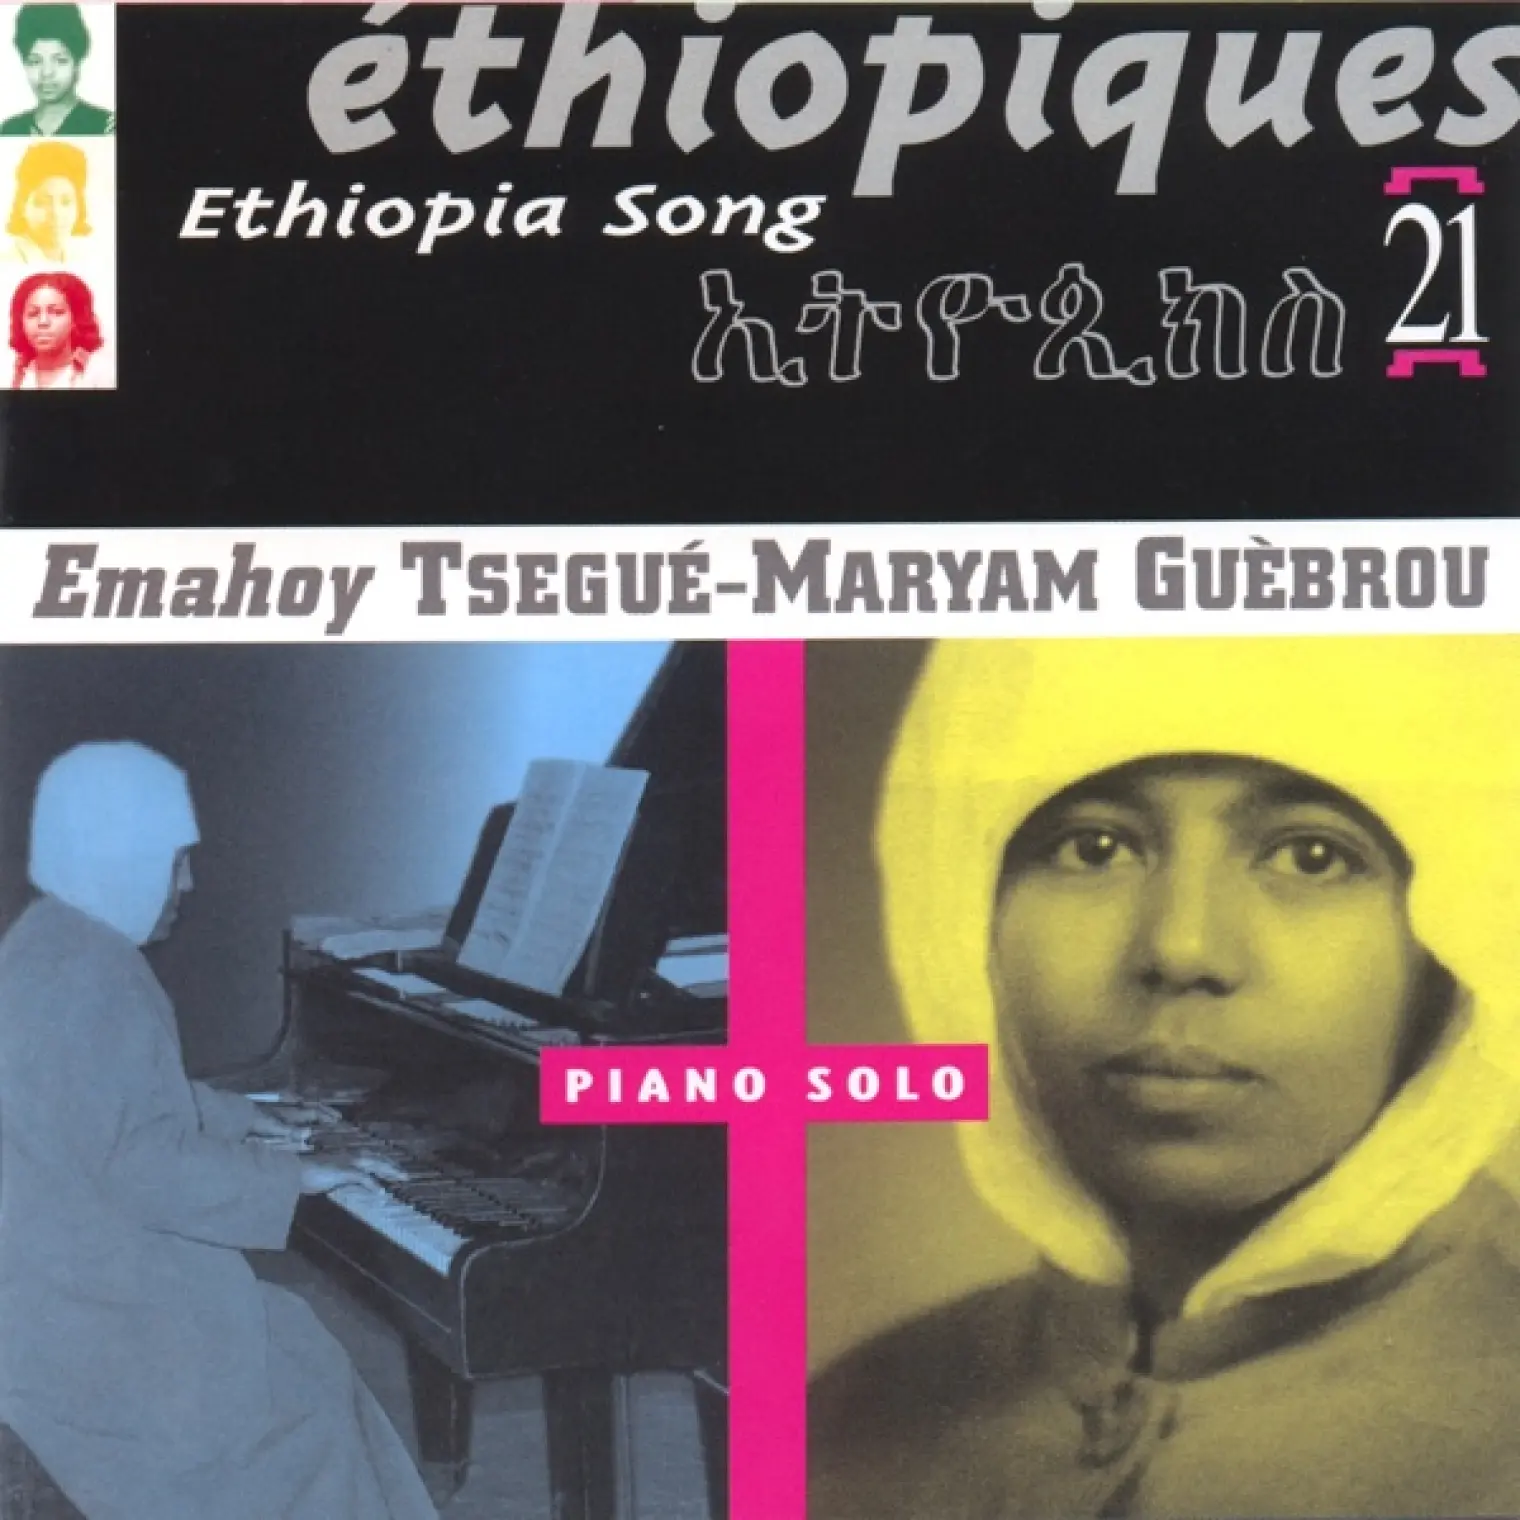 Ethiopiques, vol. 21: Emahoy -  Tsegue-maryam Guebrou 